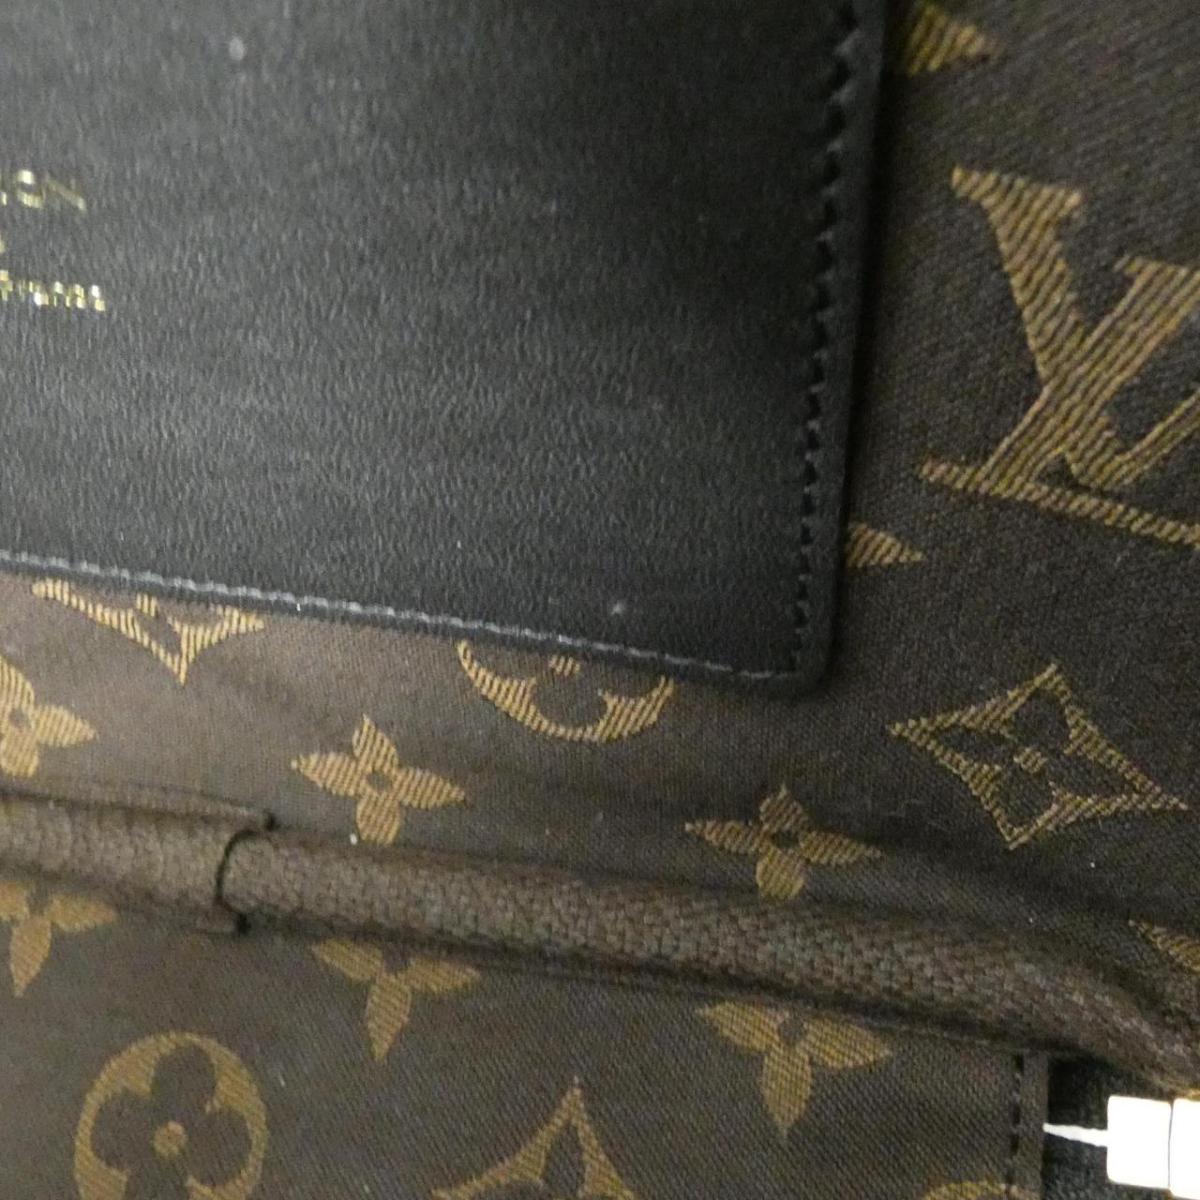 Louis Vuitton M80450 Cross-Body Utility Shoulder Bag